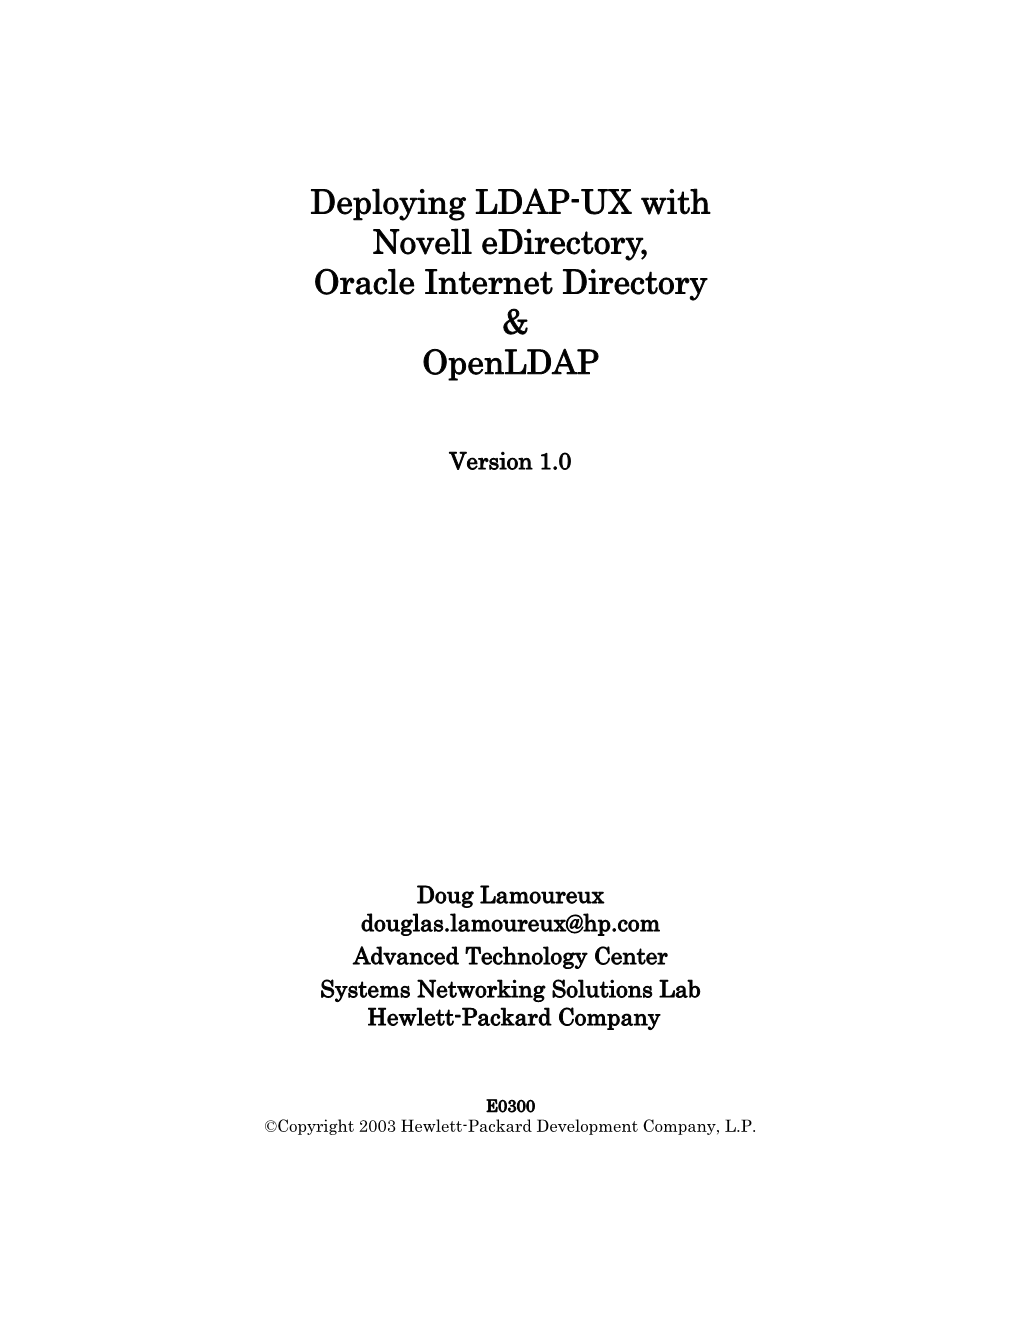 Deploying LDAP-UX Version